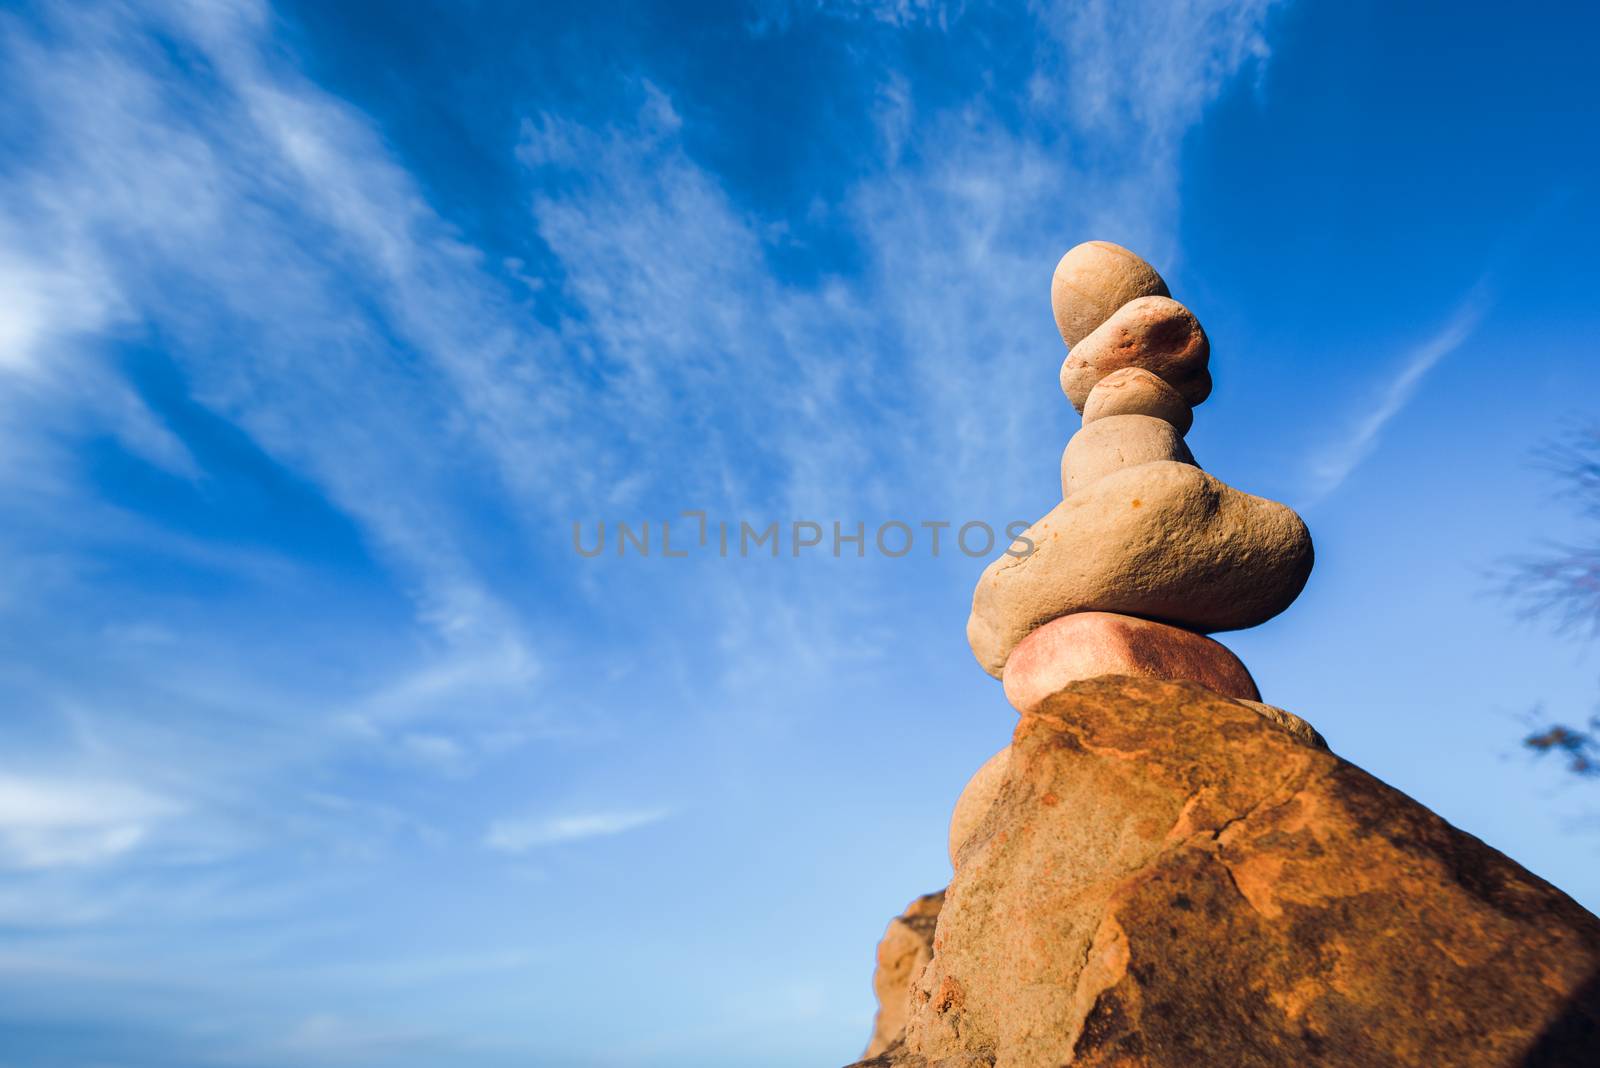 Stones on sky background by styf22